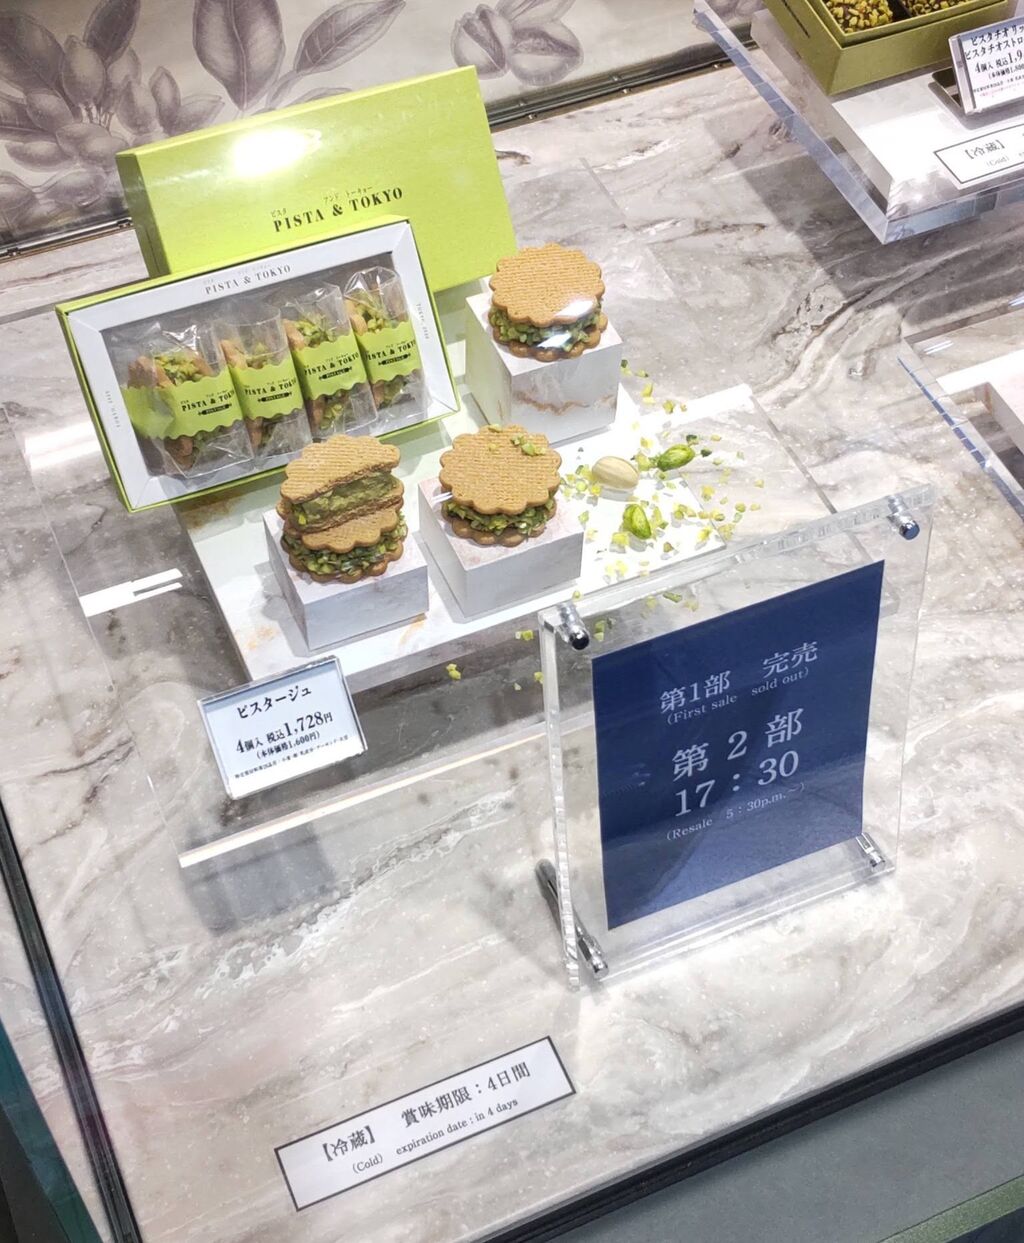 PISTA&TOKYO東京ギフトパレット店店頭のピスタージュの写真